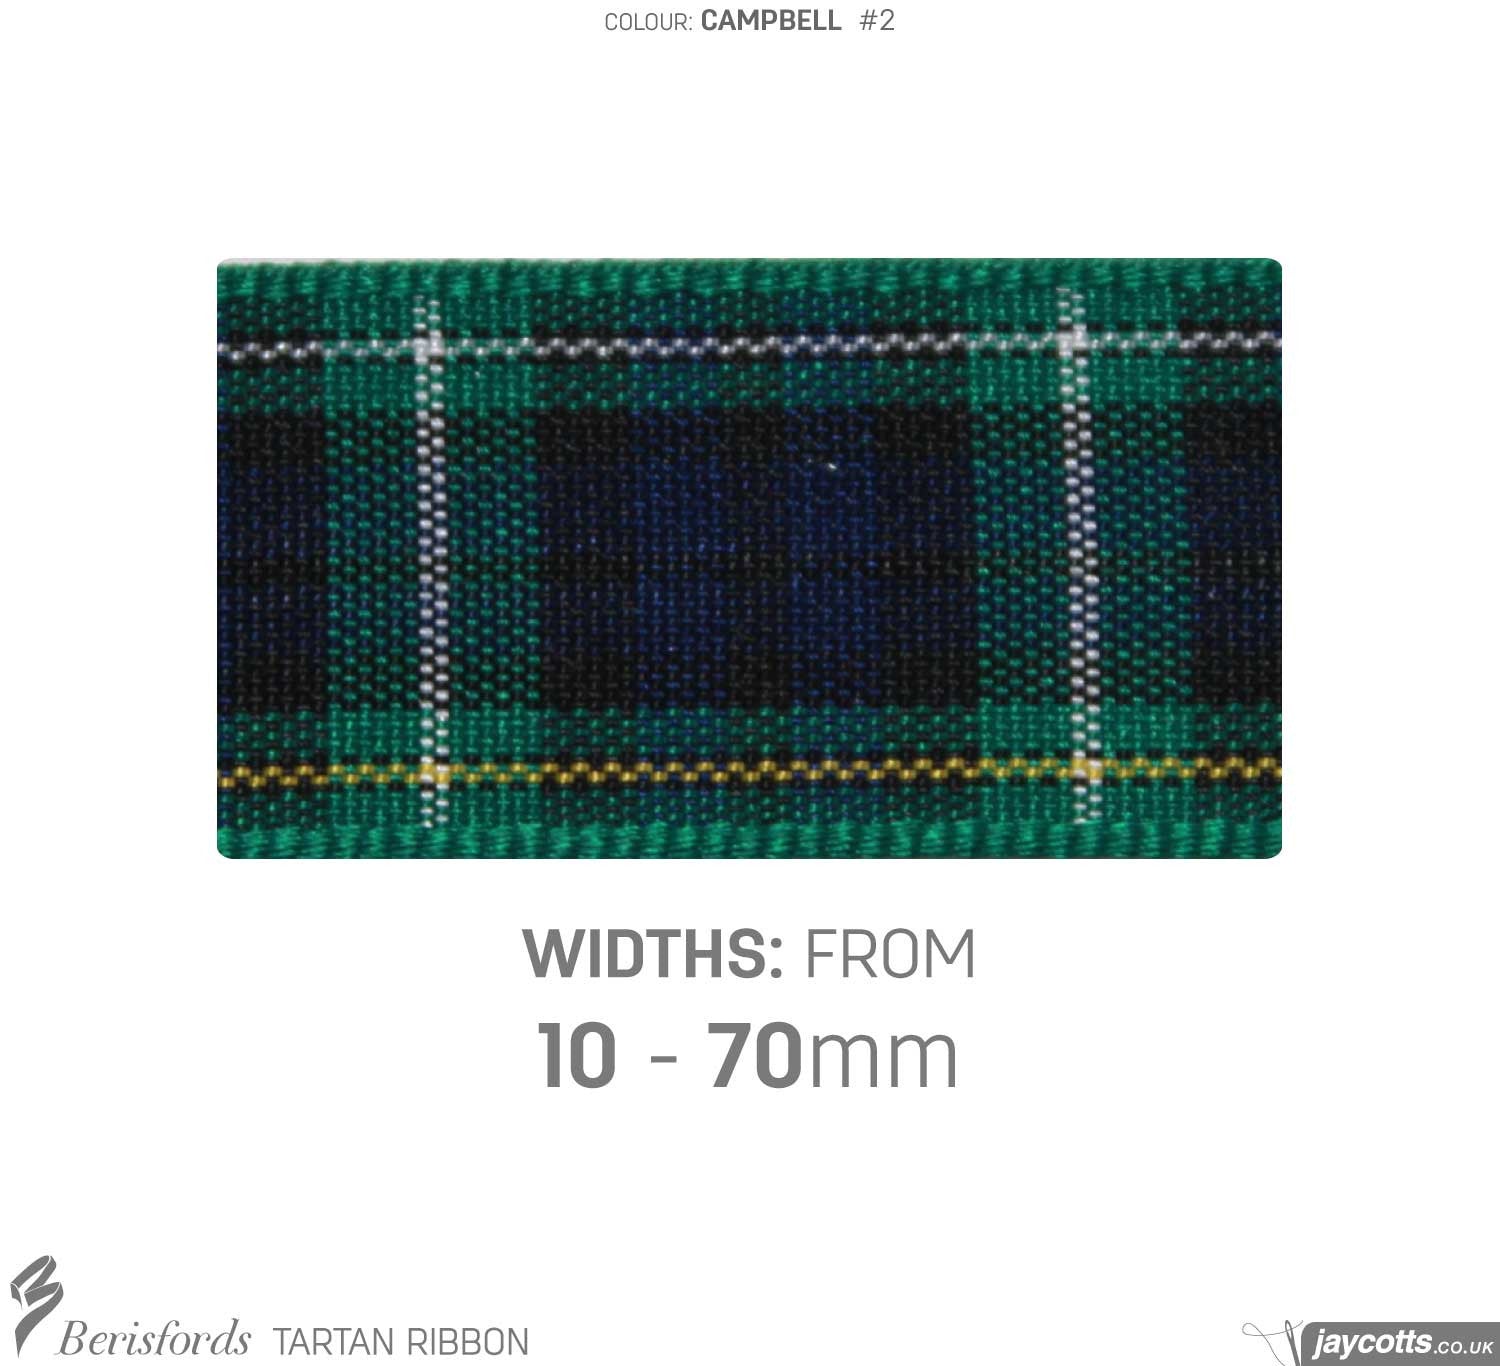 Berisfords Tartan Ribbon: #2 Campbell from Jaycotts Sewing Supplies